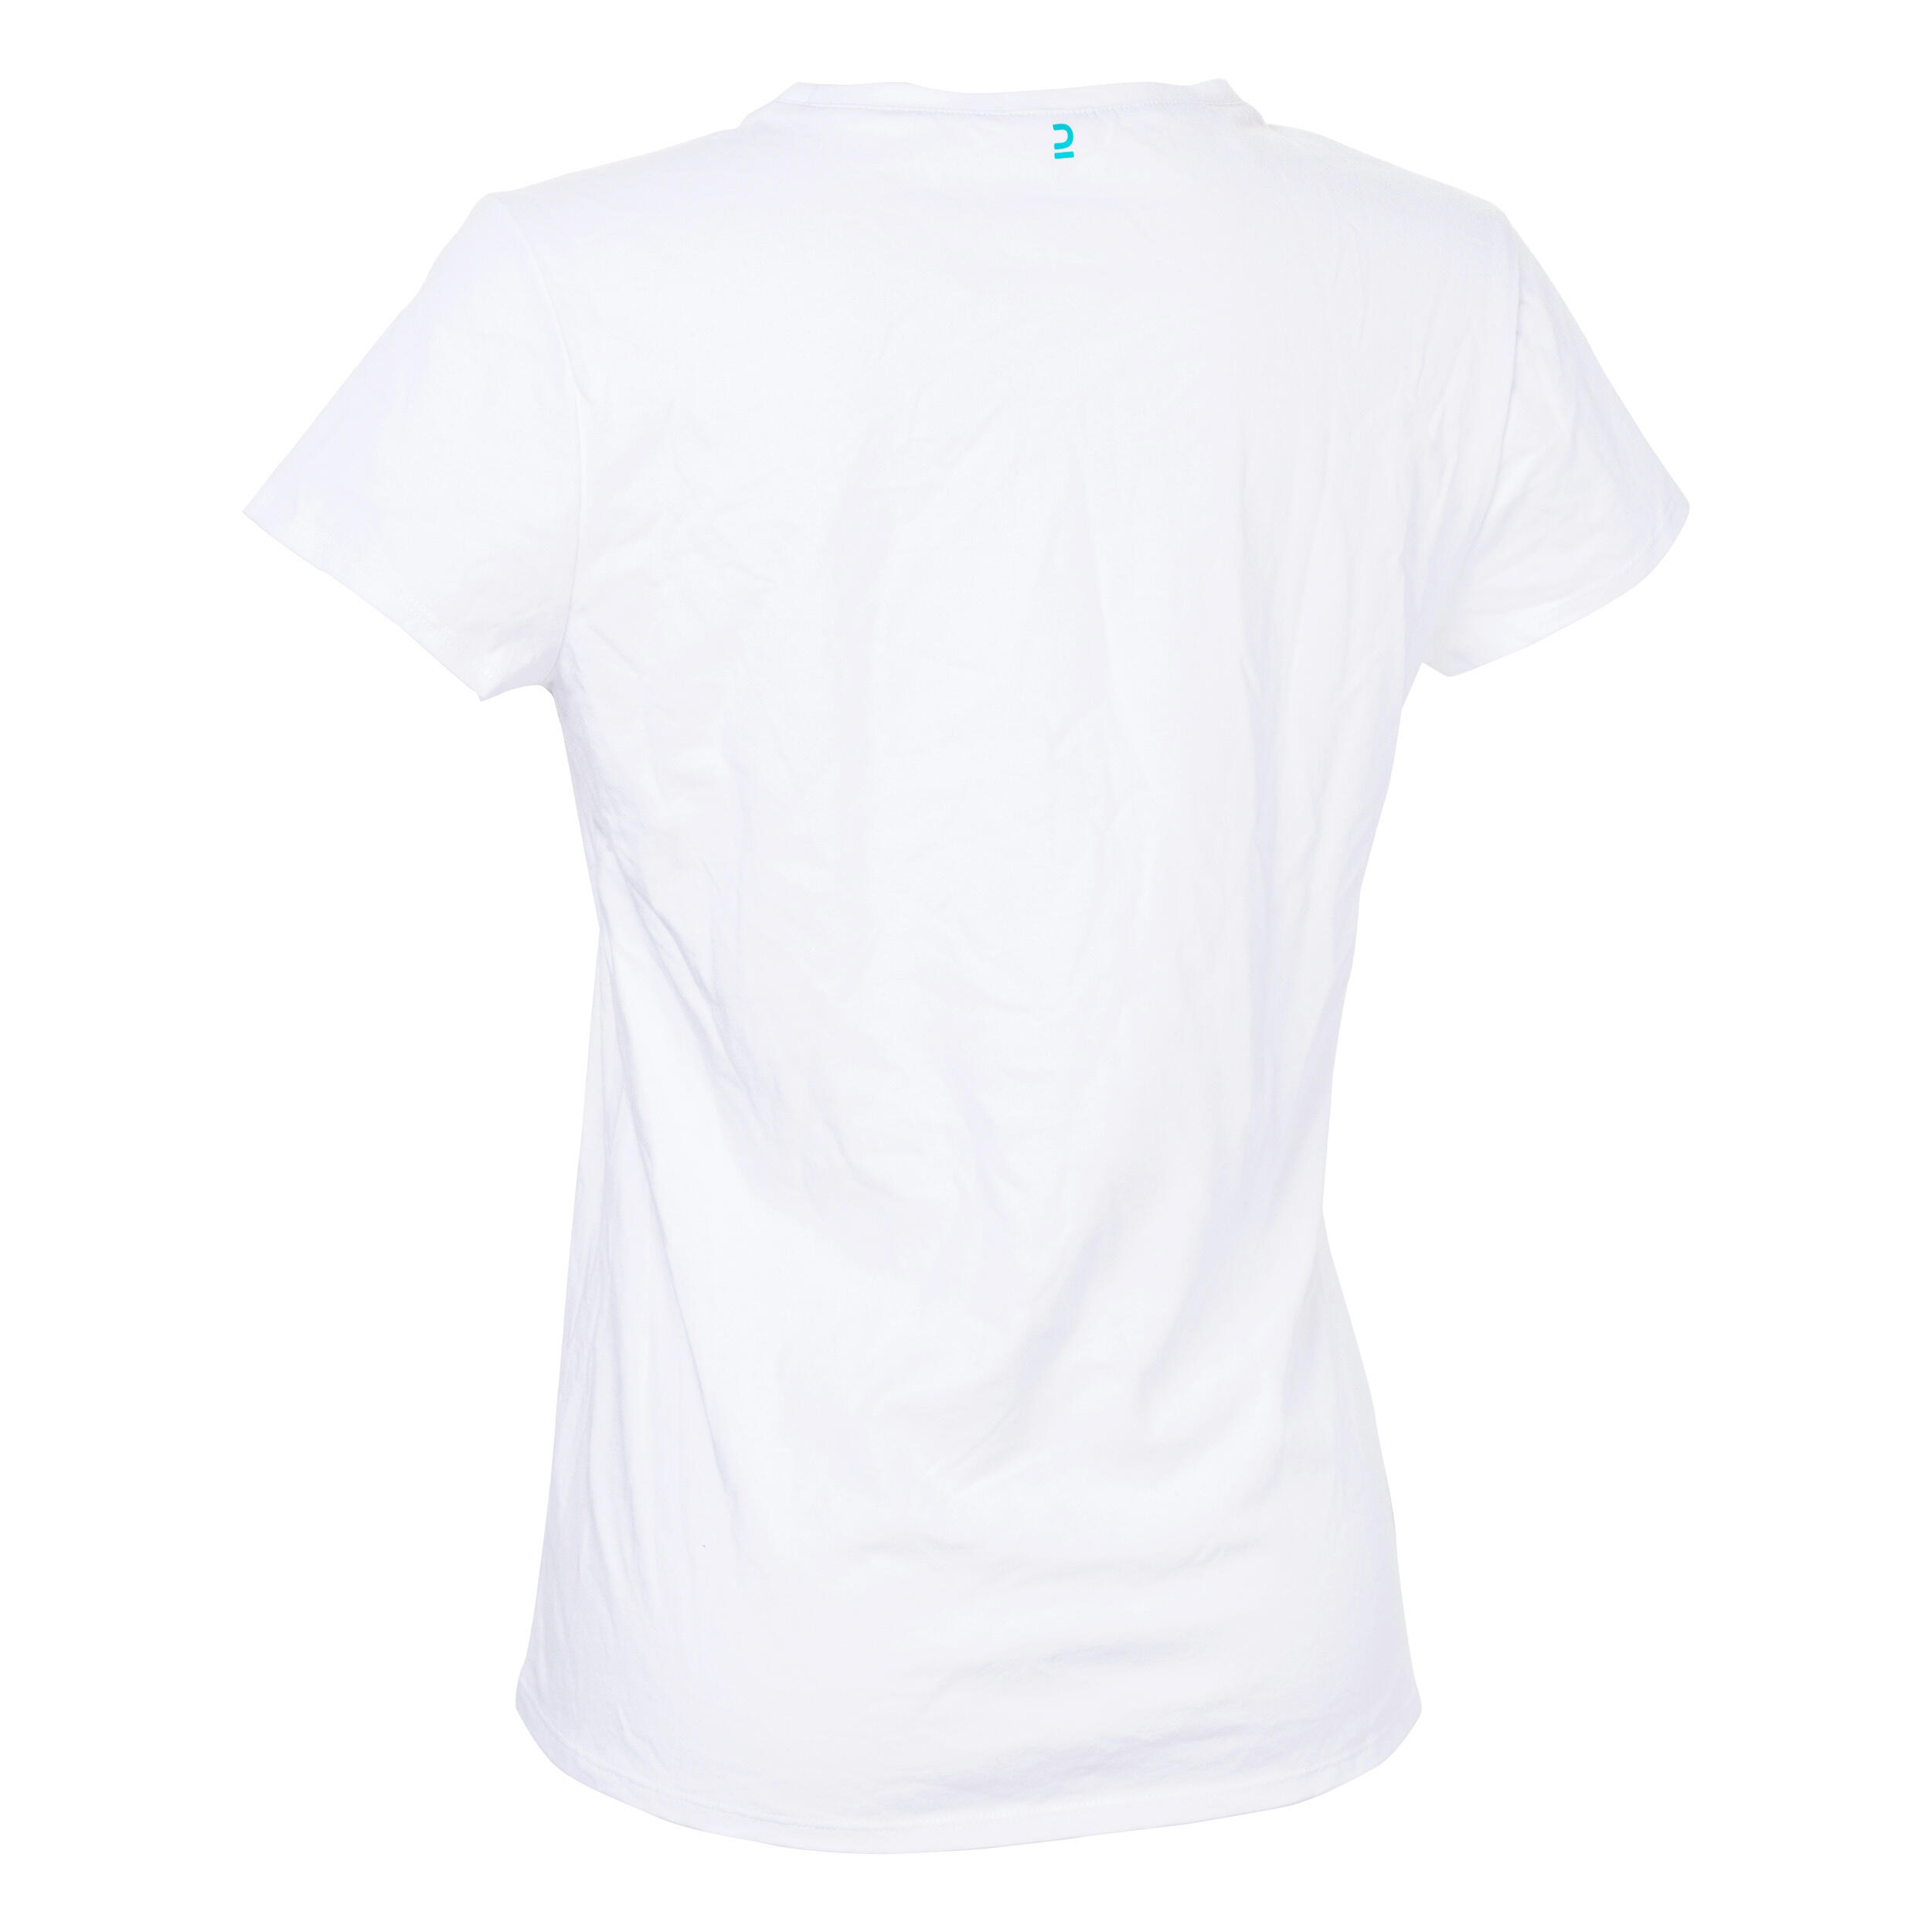 Women's Field Hockey T-Shirt FH110 - White/Turquoise 2/3